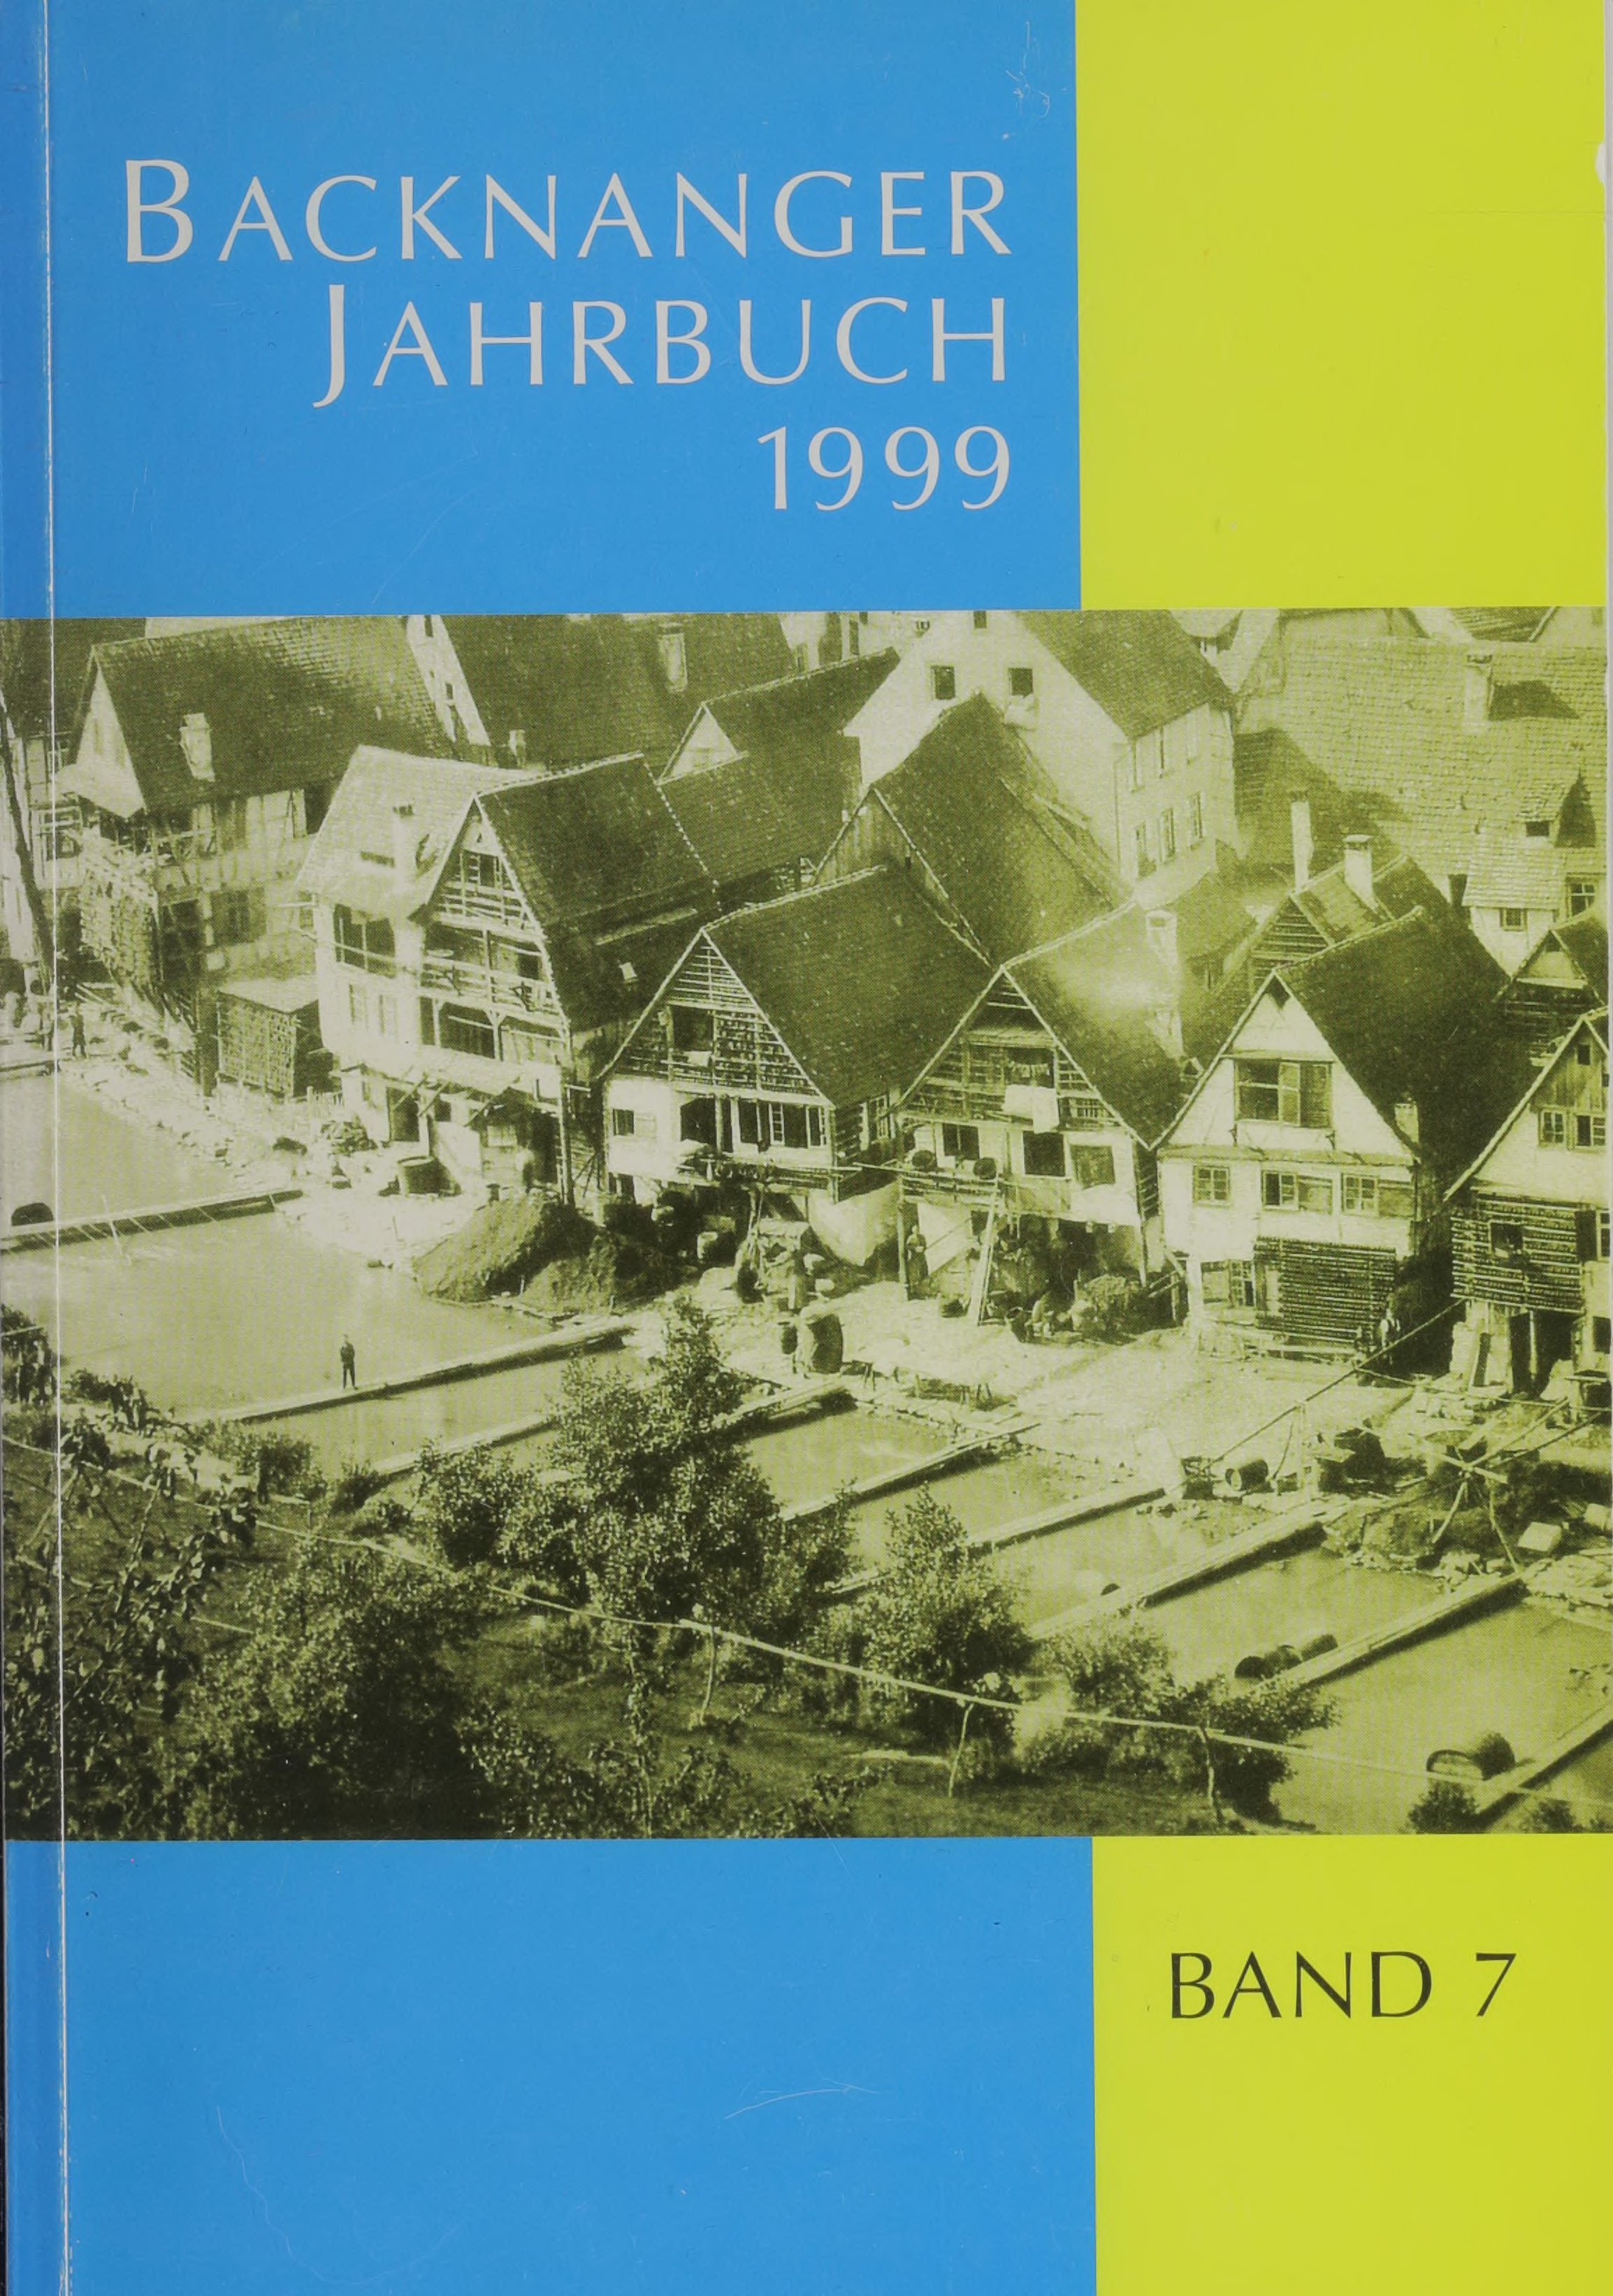                     Ansehen Bd. 7 (1999): Backnanger Jahrbuch
                